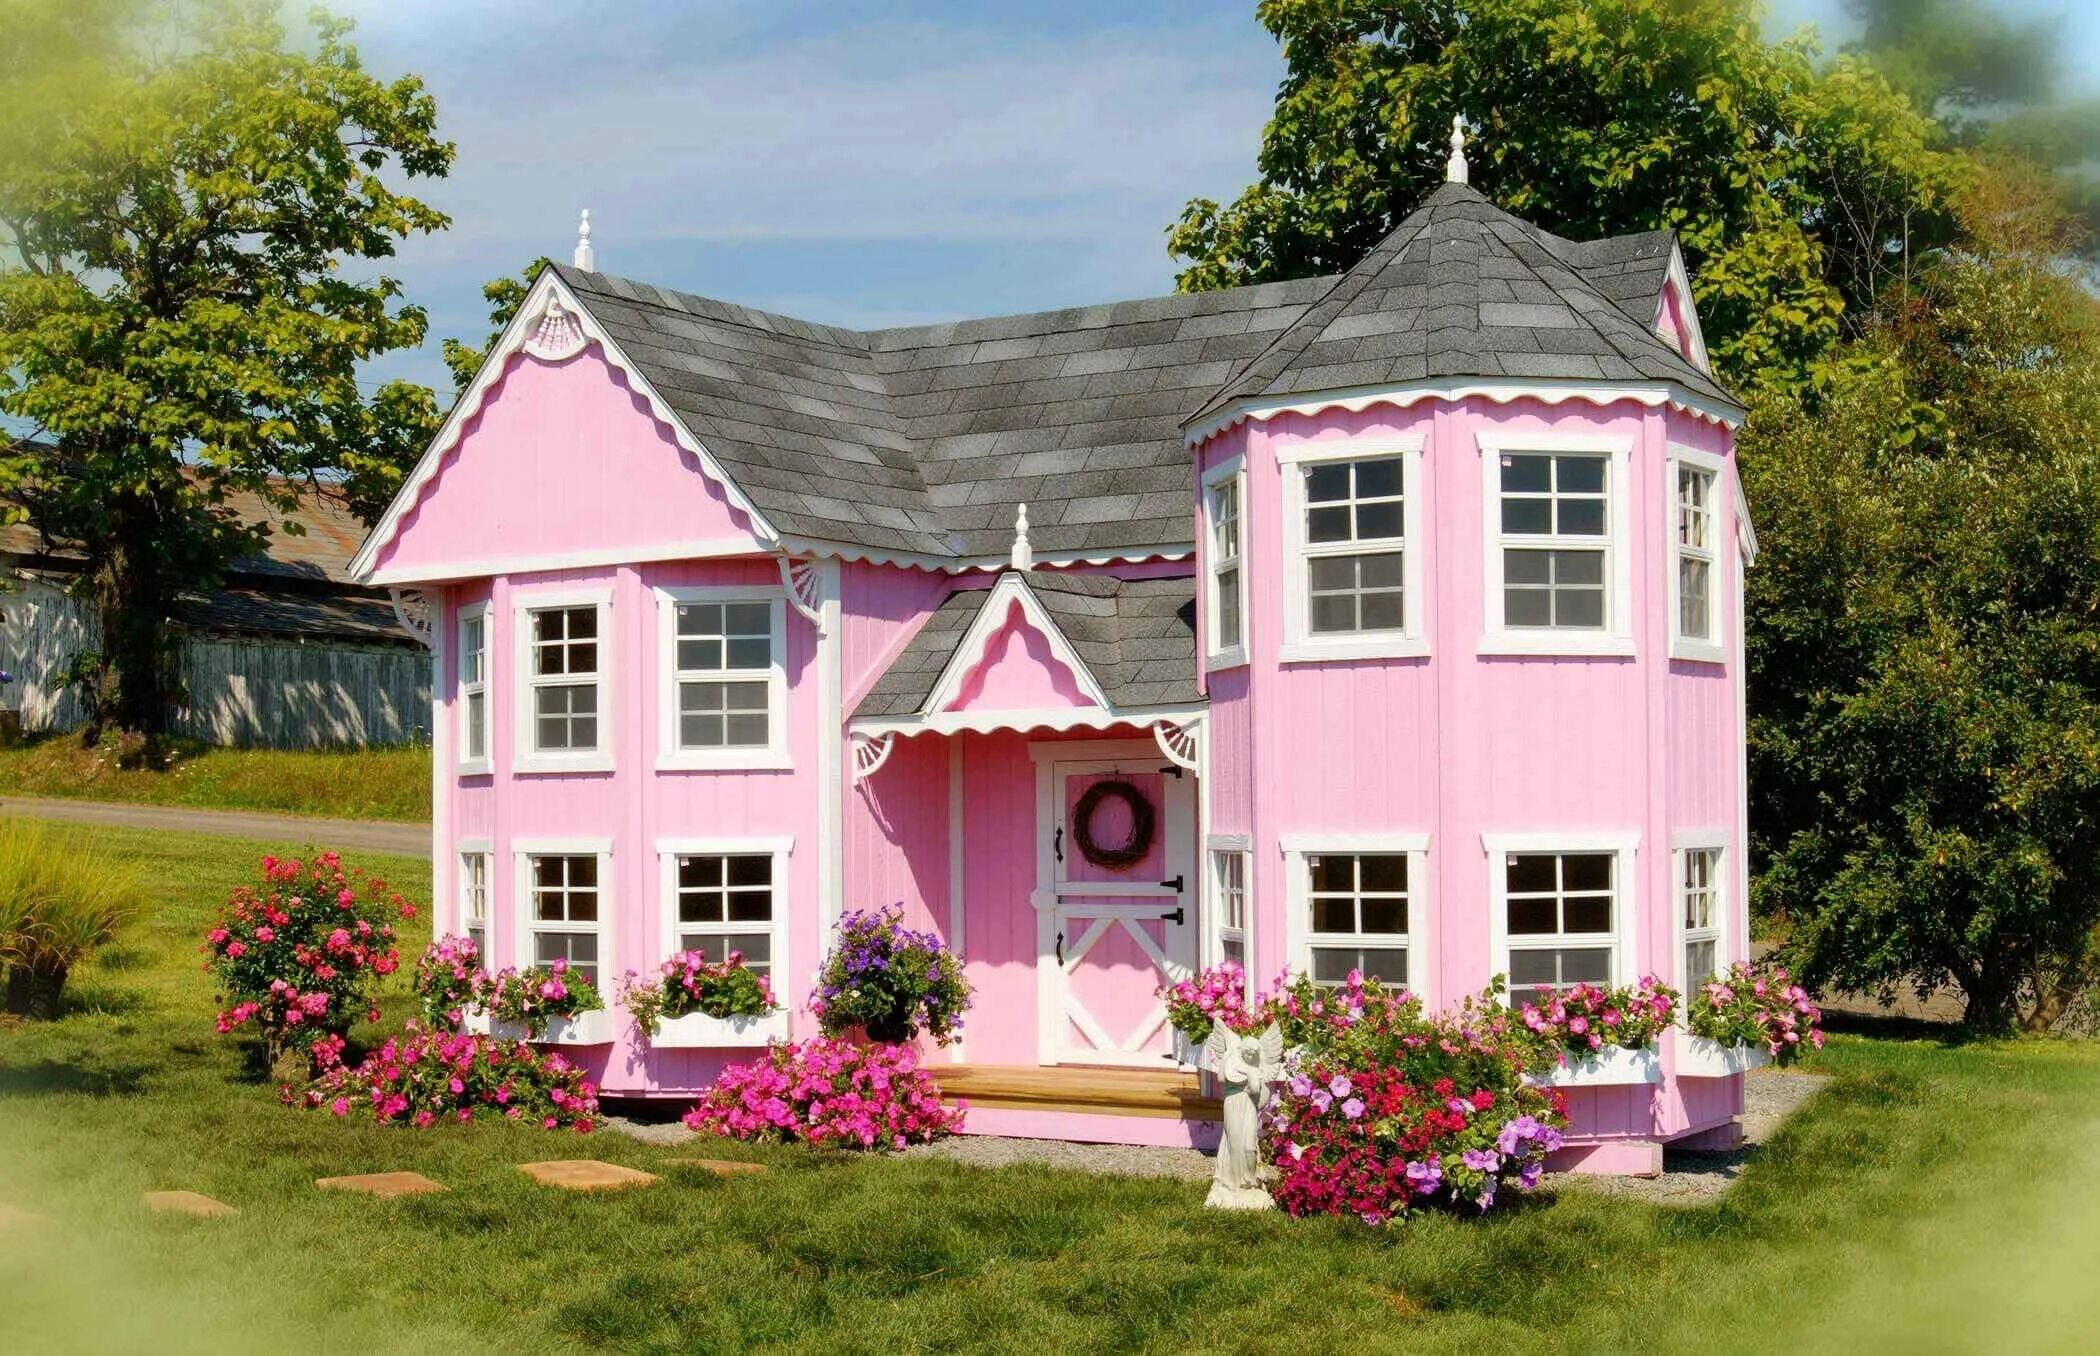 Фото розового дома. Викториан Пинк Хаус. Ашленд Орегон розовый дворец. Домик для детей. Розовый дом.